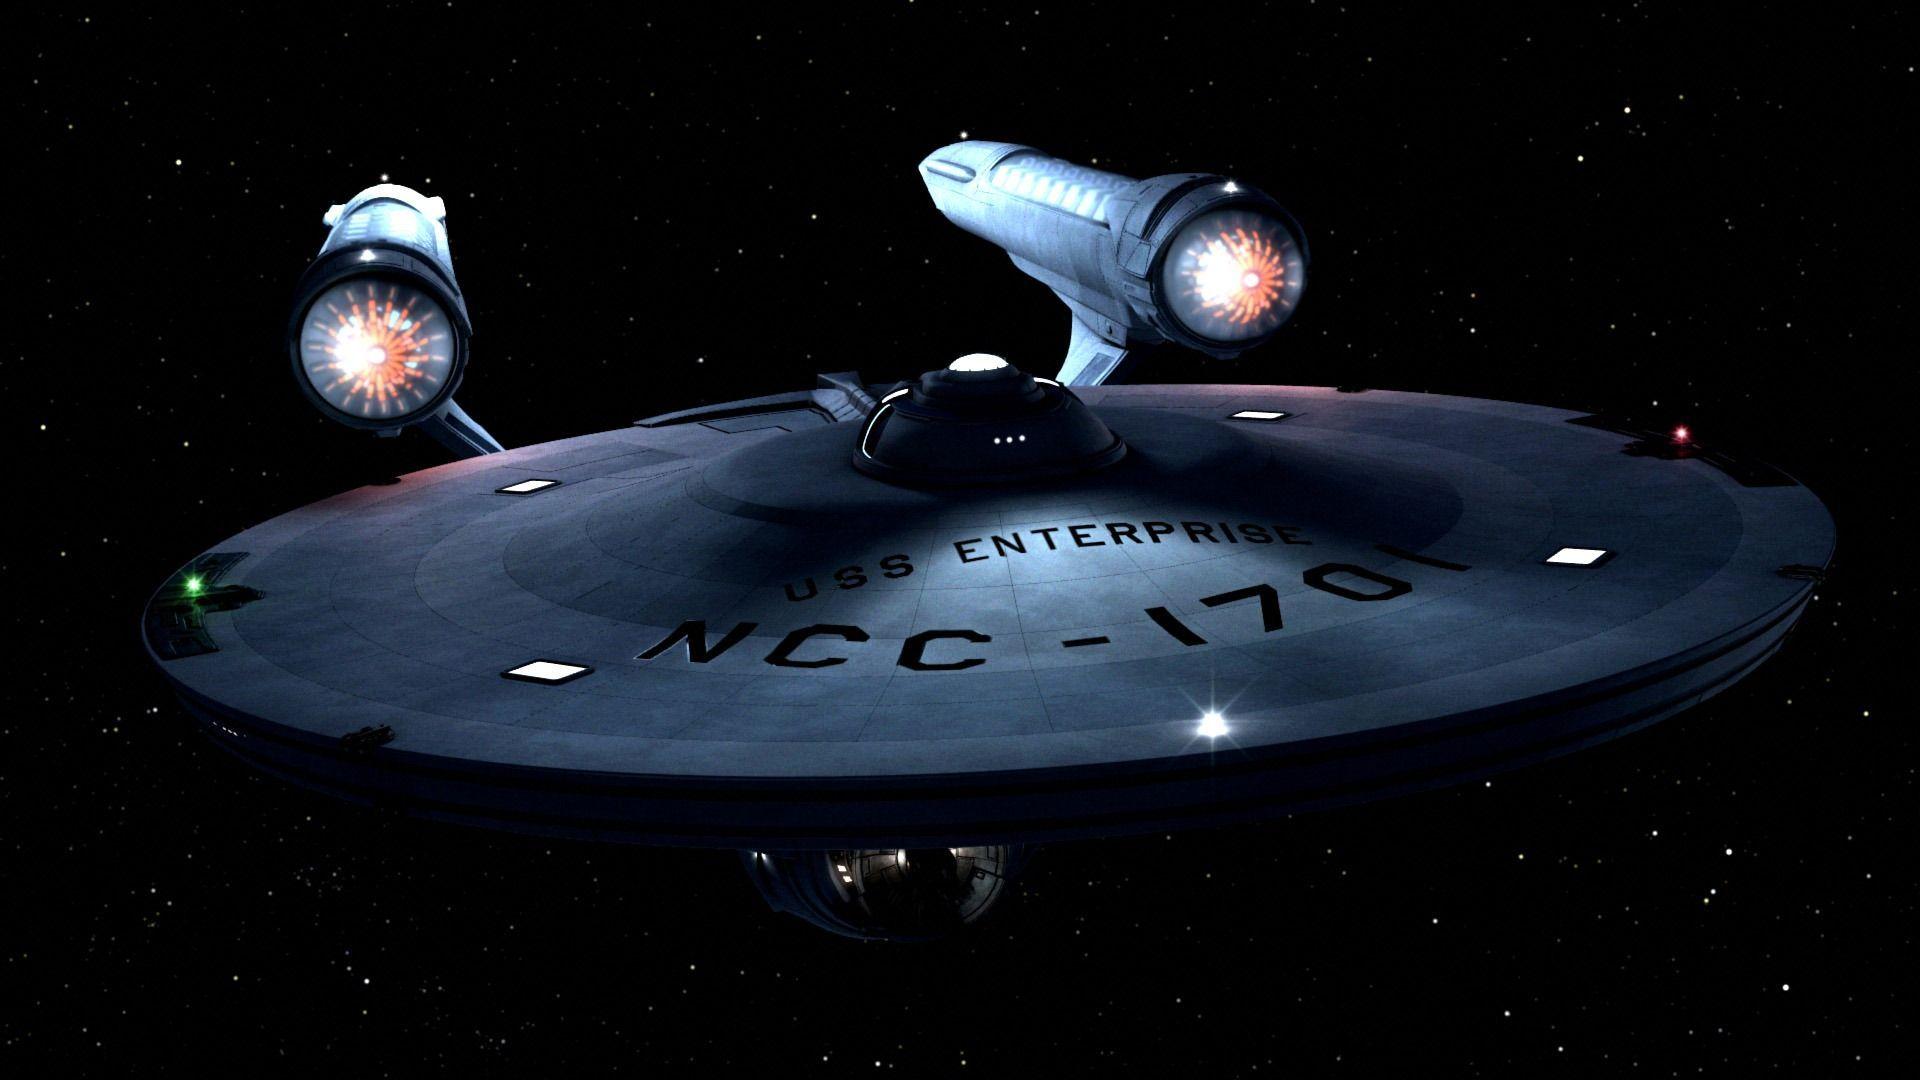 Star Trek Daily Pic Pic # TOS Enterprise. Star trek wallpaper, Star trek into darkness, New star trek